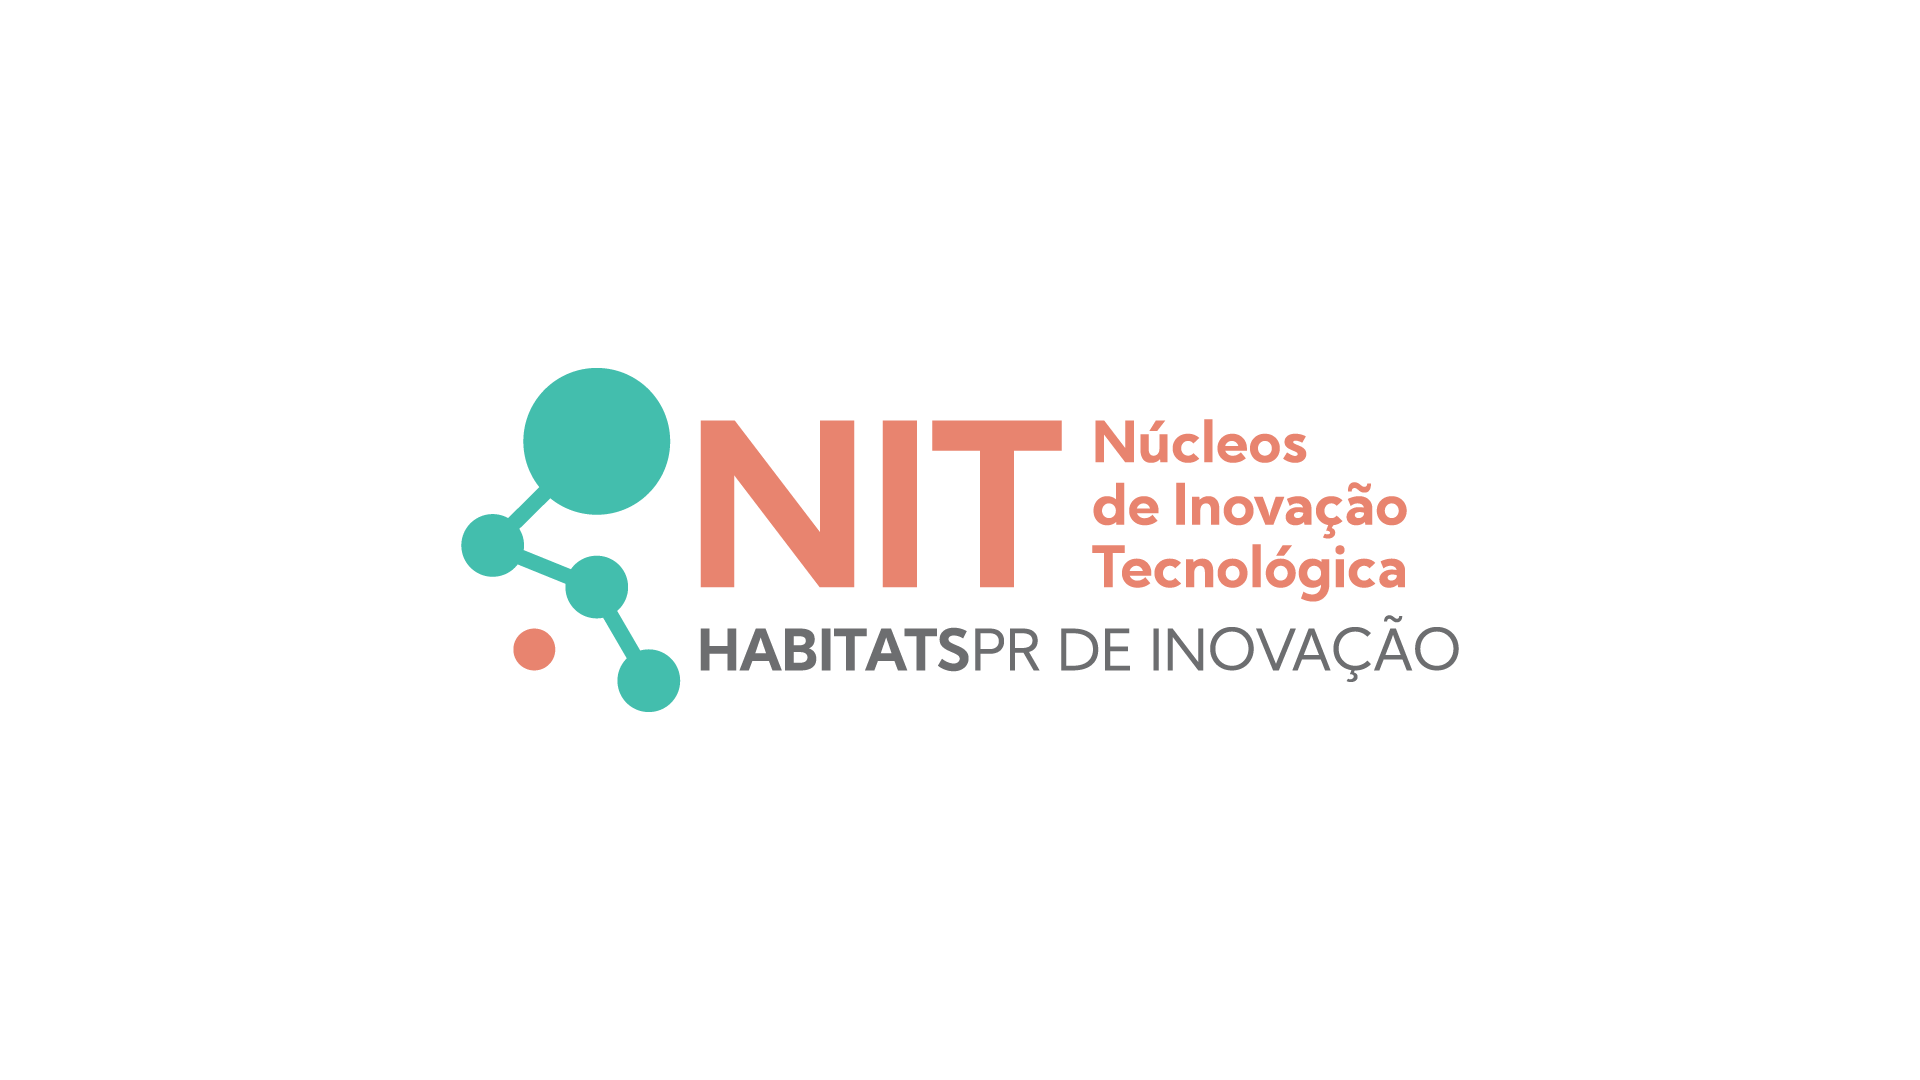 NIT - Habitats de Inovação - Turma 1.2023